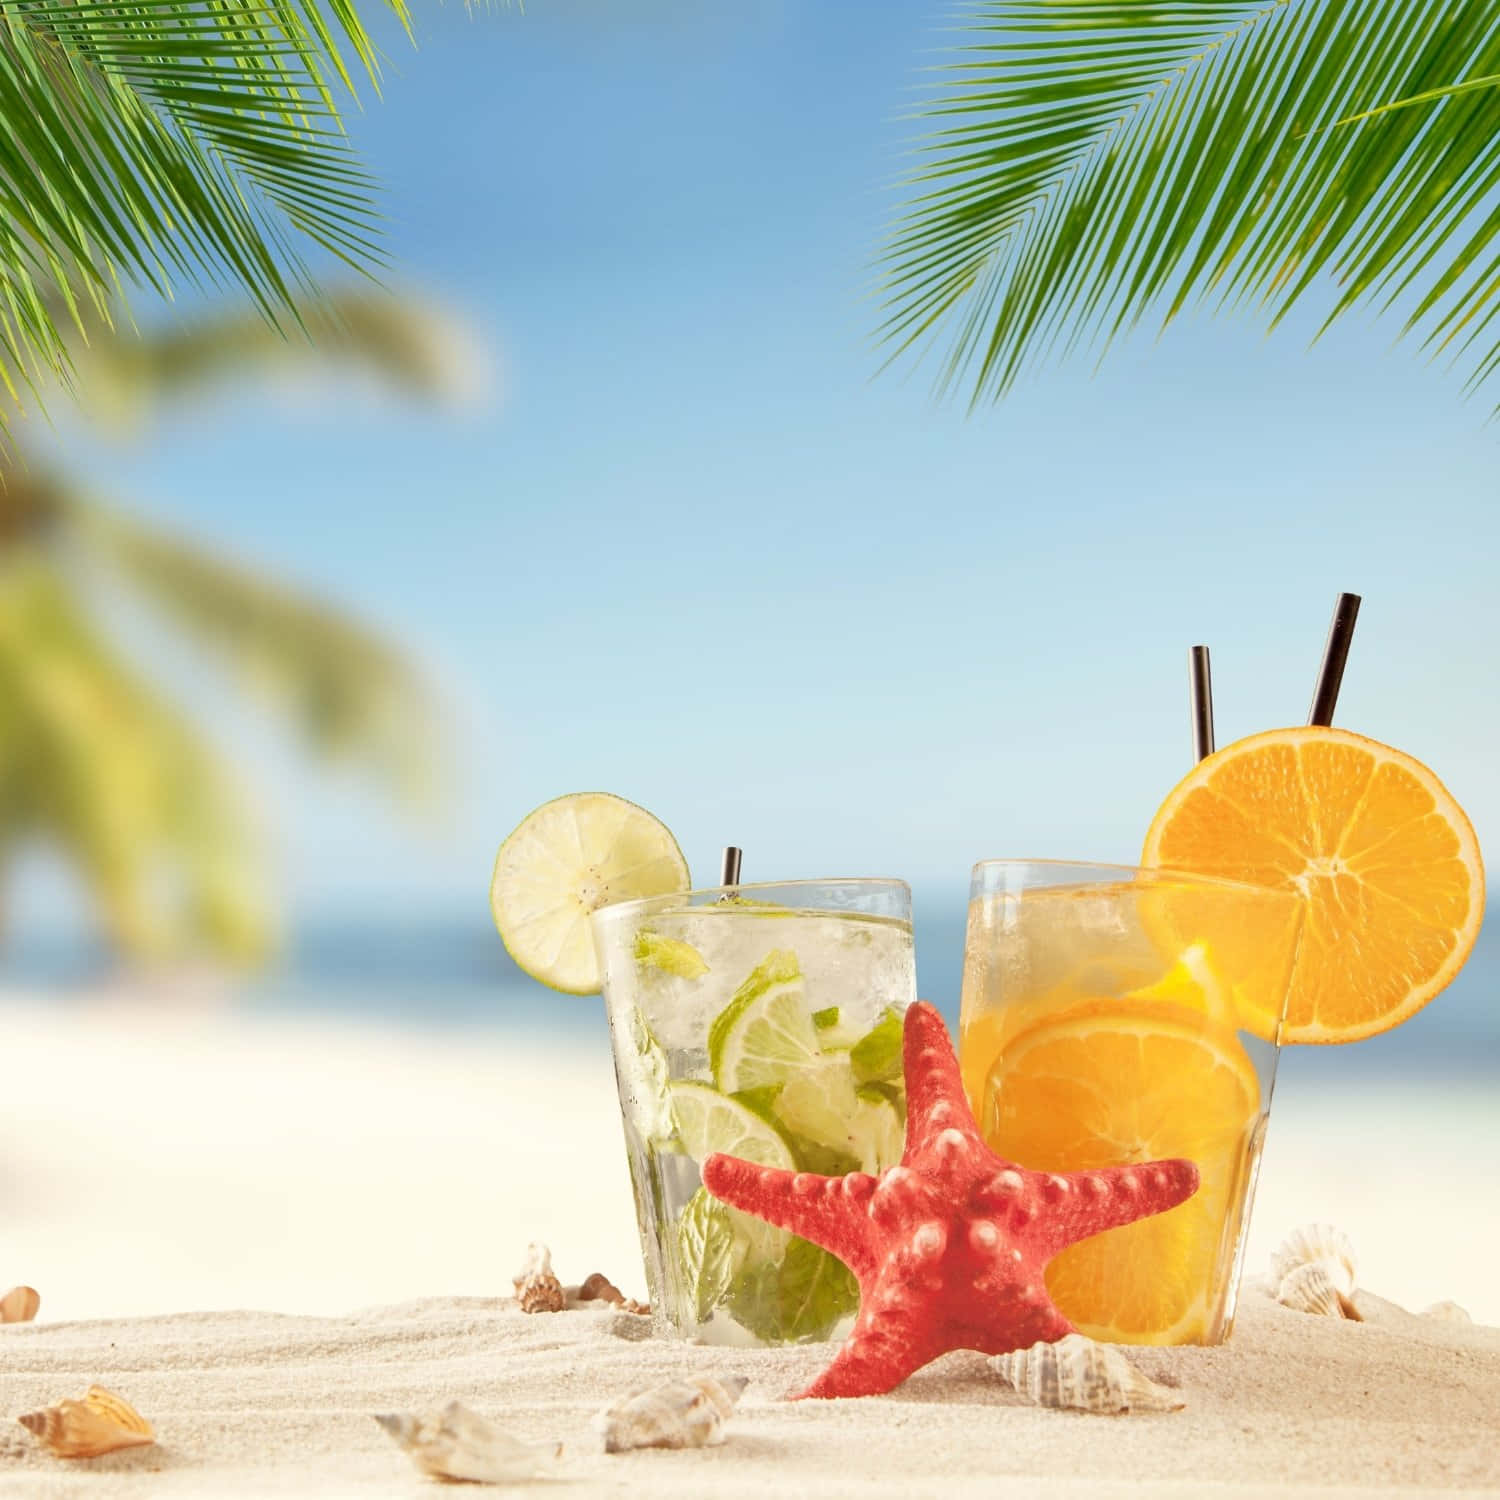 Tropical_ Beach_ Cocktails Wallpaper